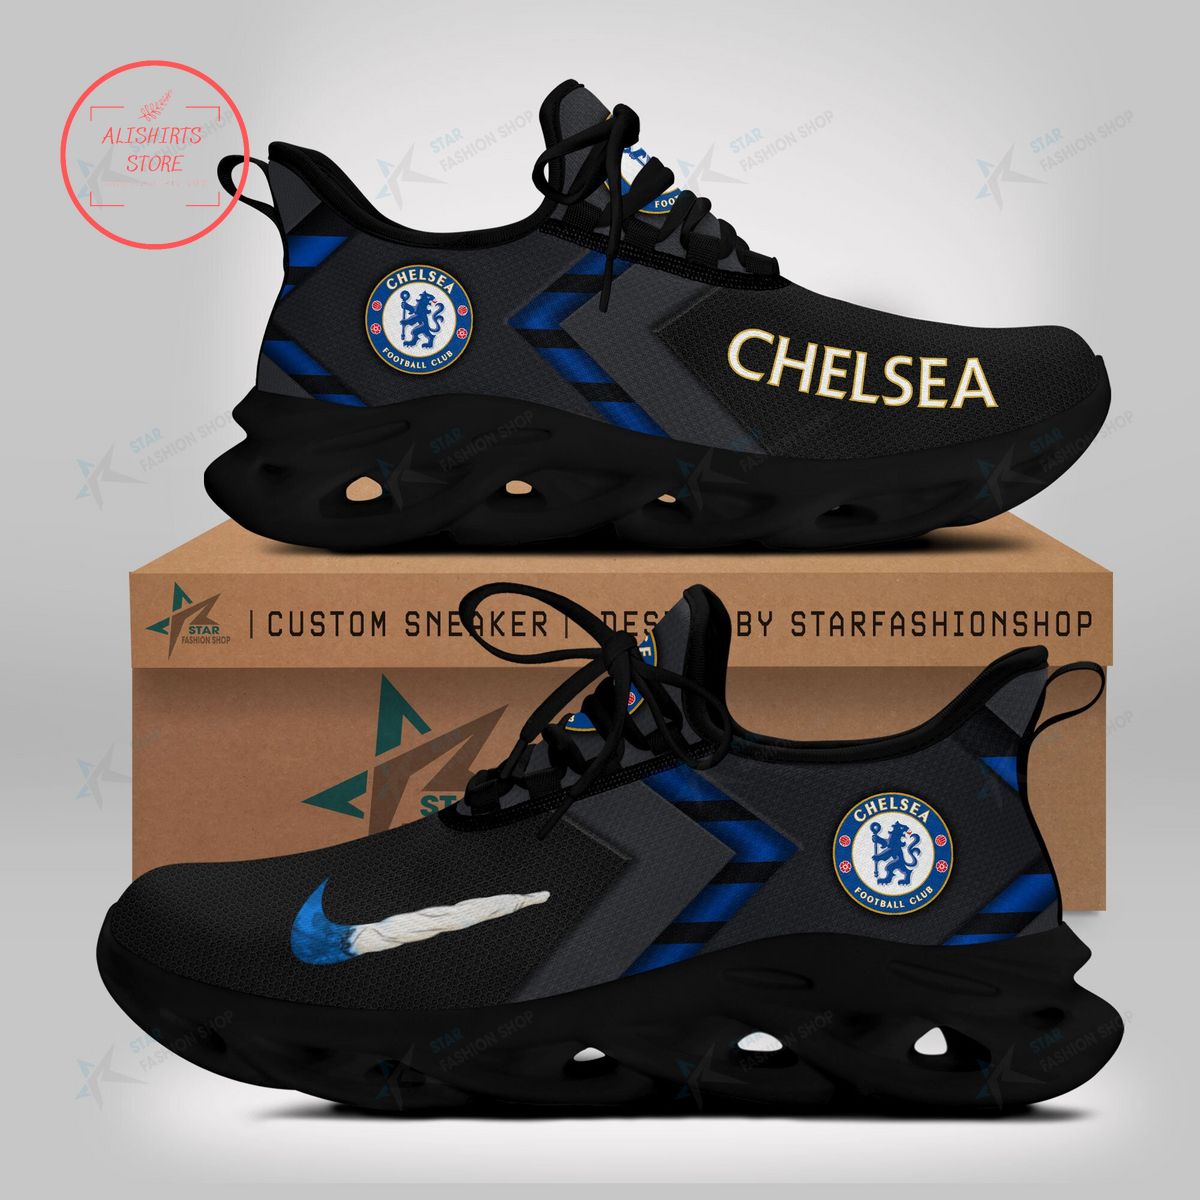 Chelsea FC Max Soul Sneaker Shoes